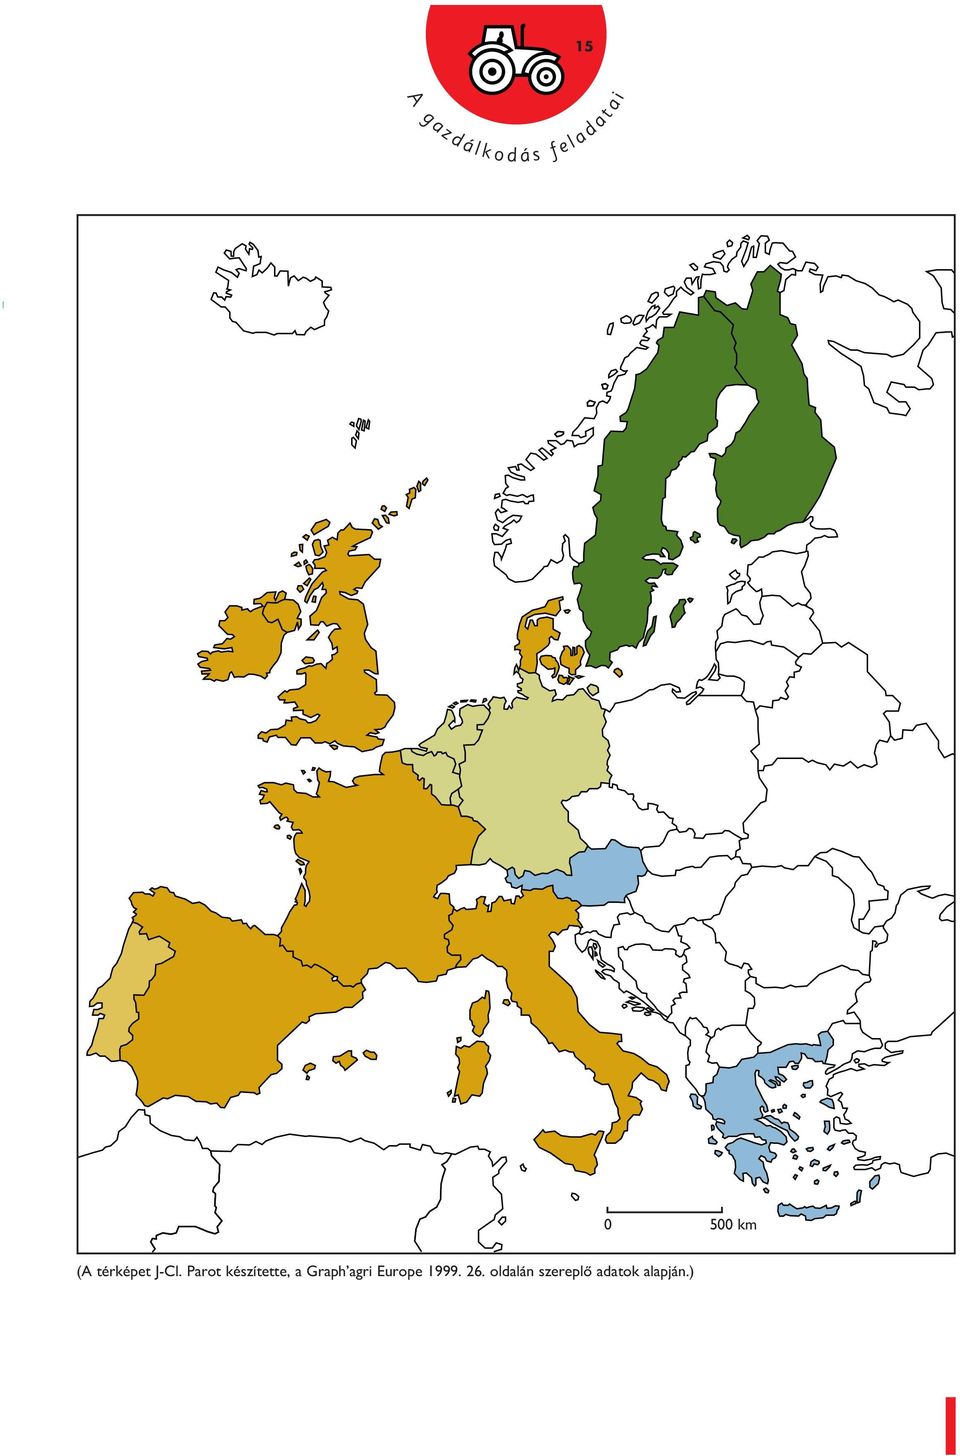 Parot készítette, a Graph agri Europe